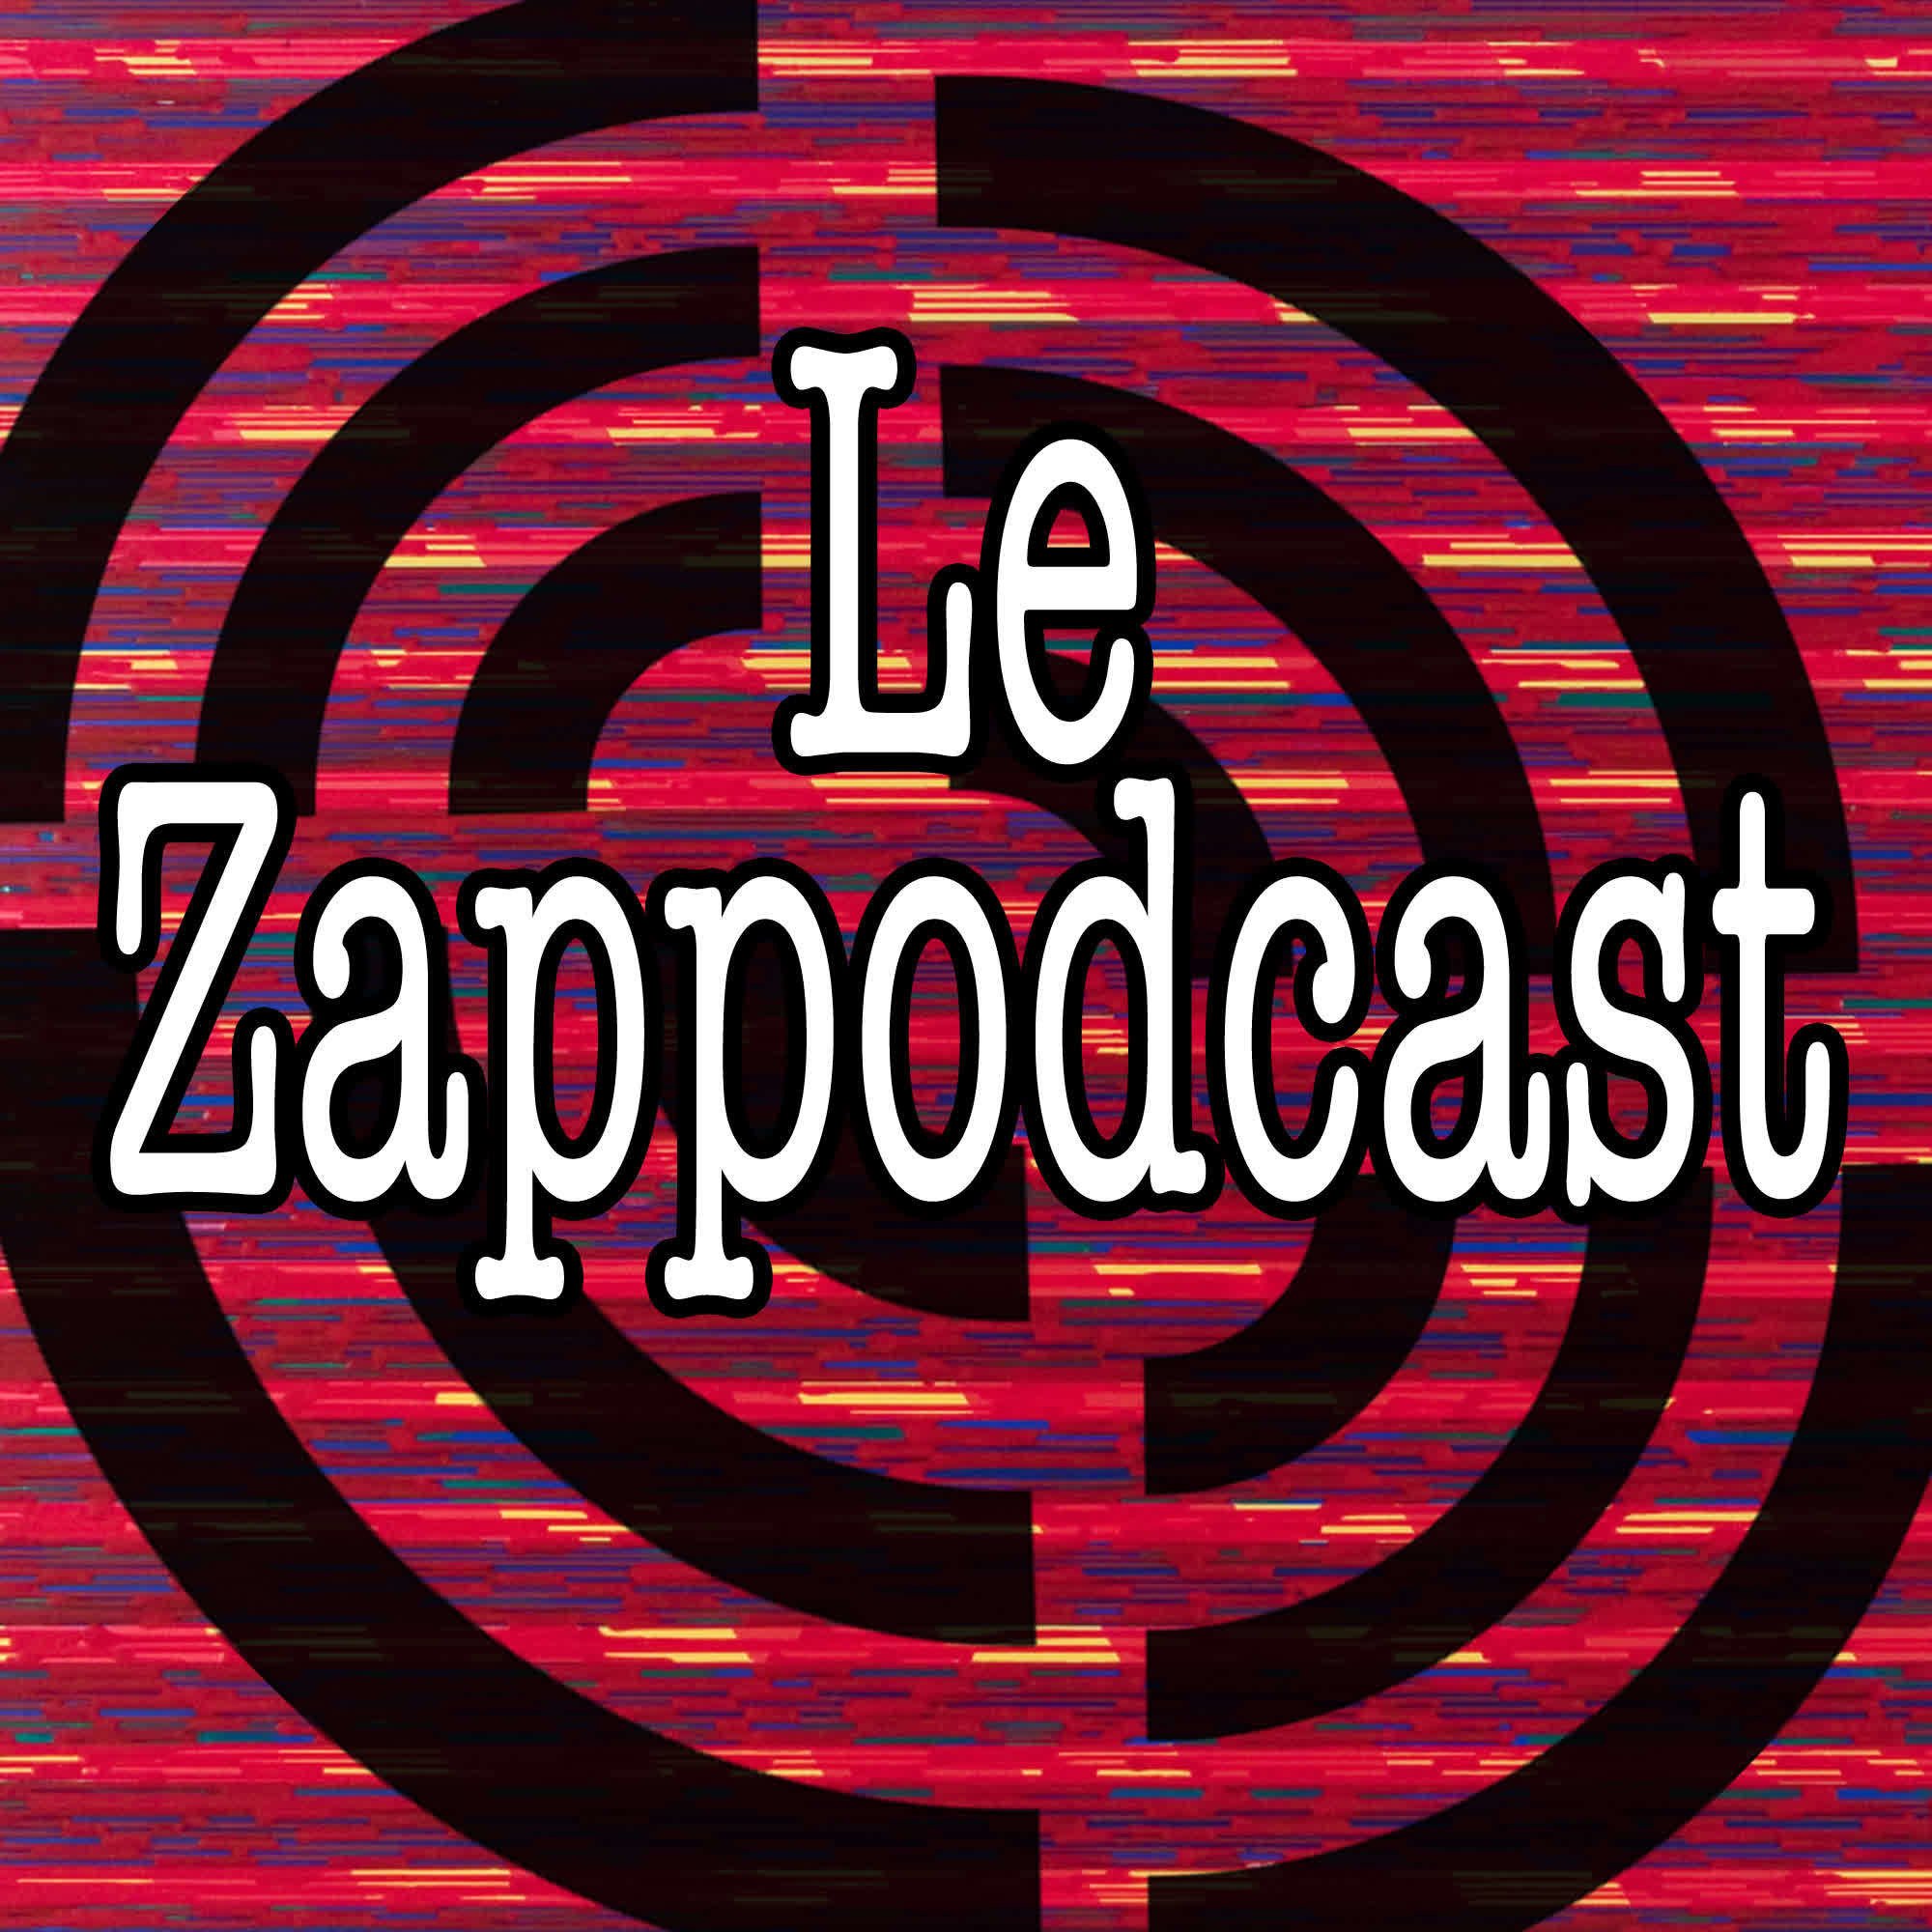 zappodcast #70